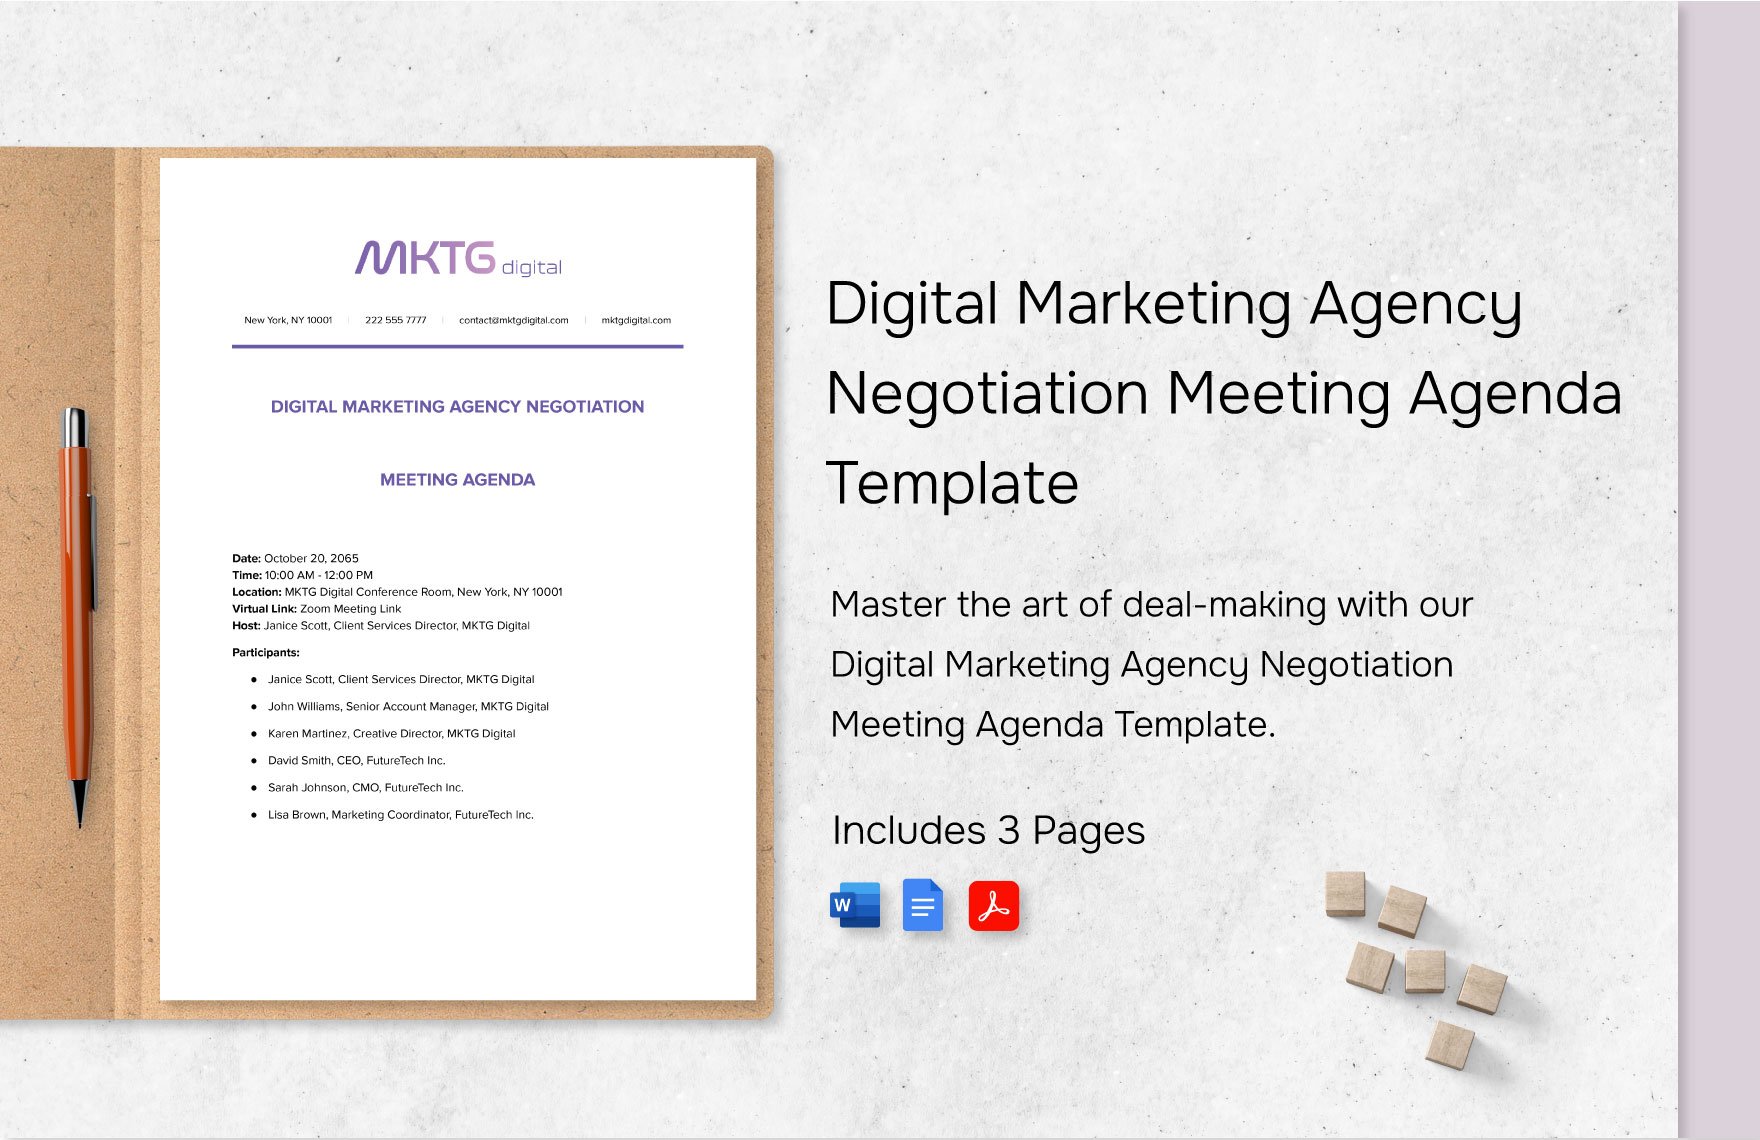 Digital Marketing Agency Negotiation Meeting Agenda Template